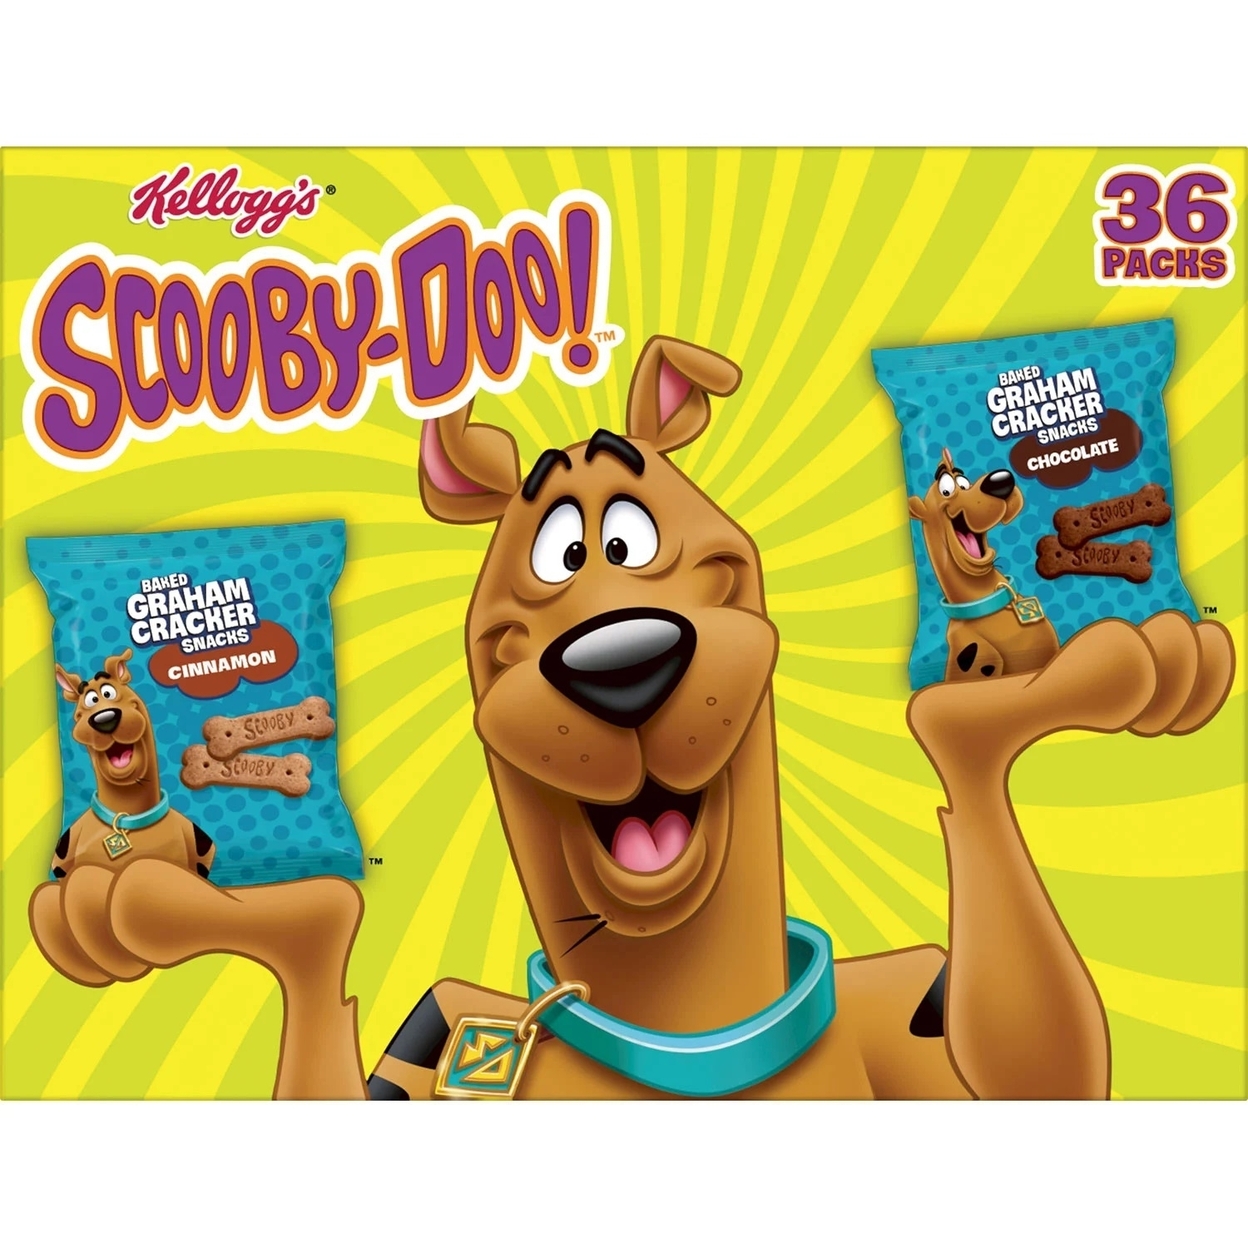 Kellogg's Scooby-Doo Grahams Variety Pack (36 Count)